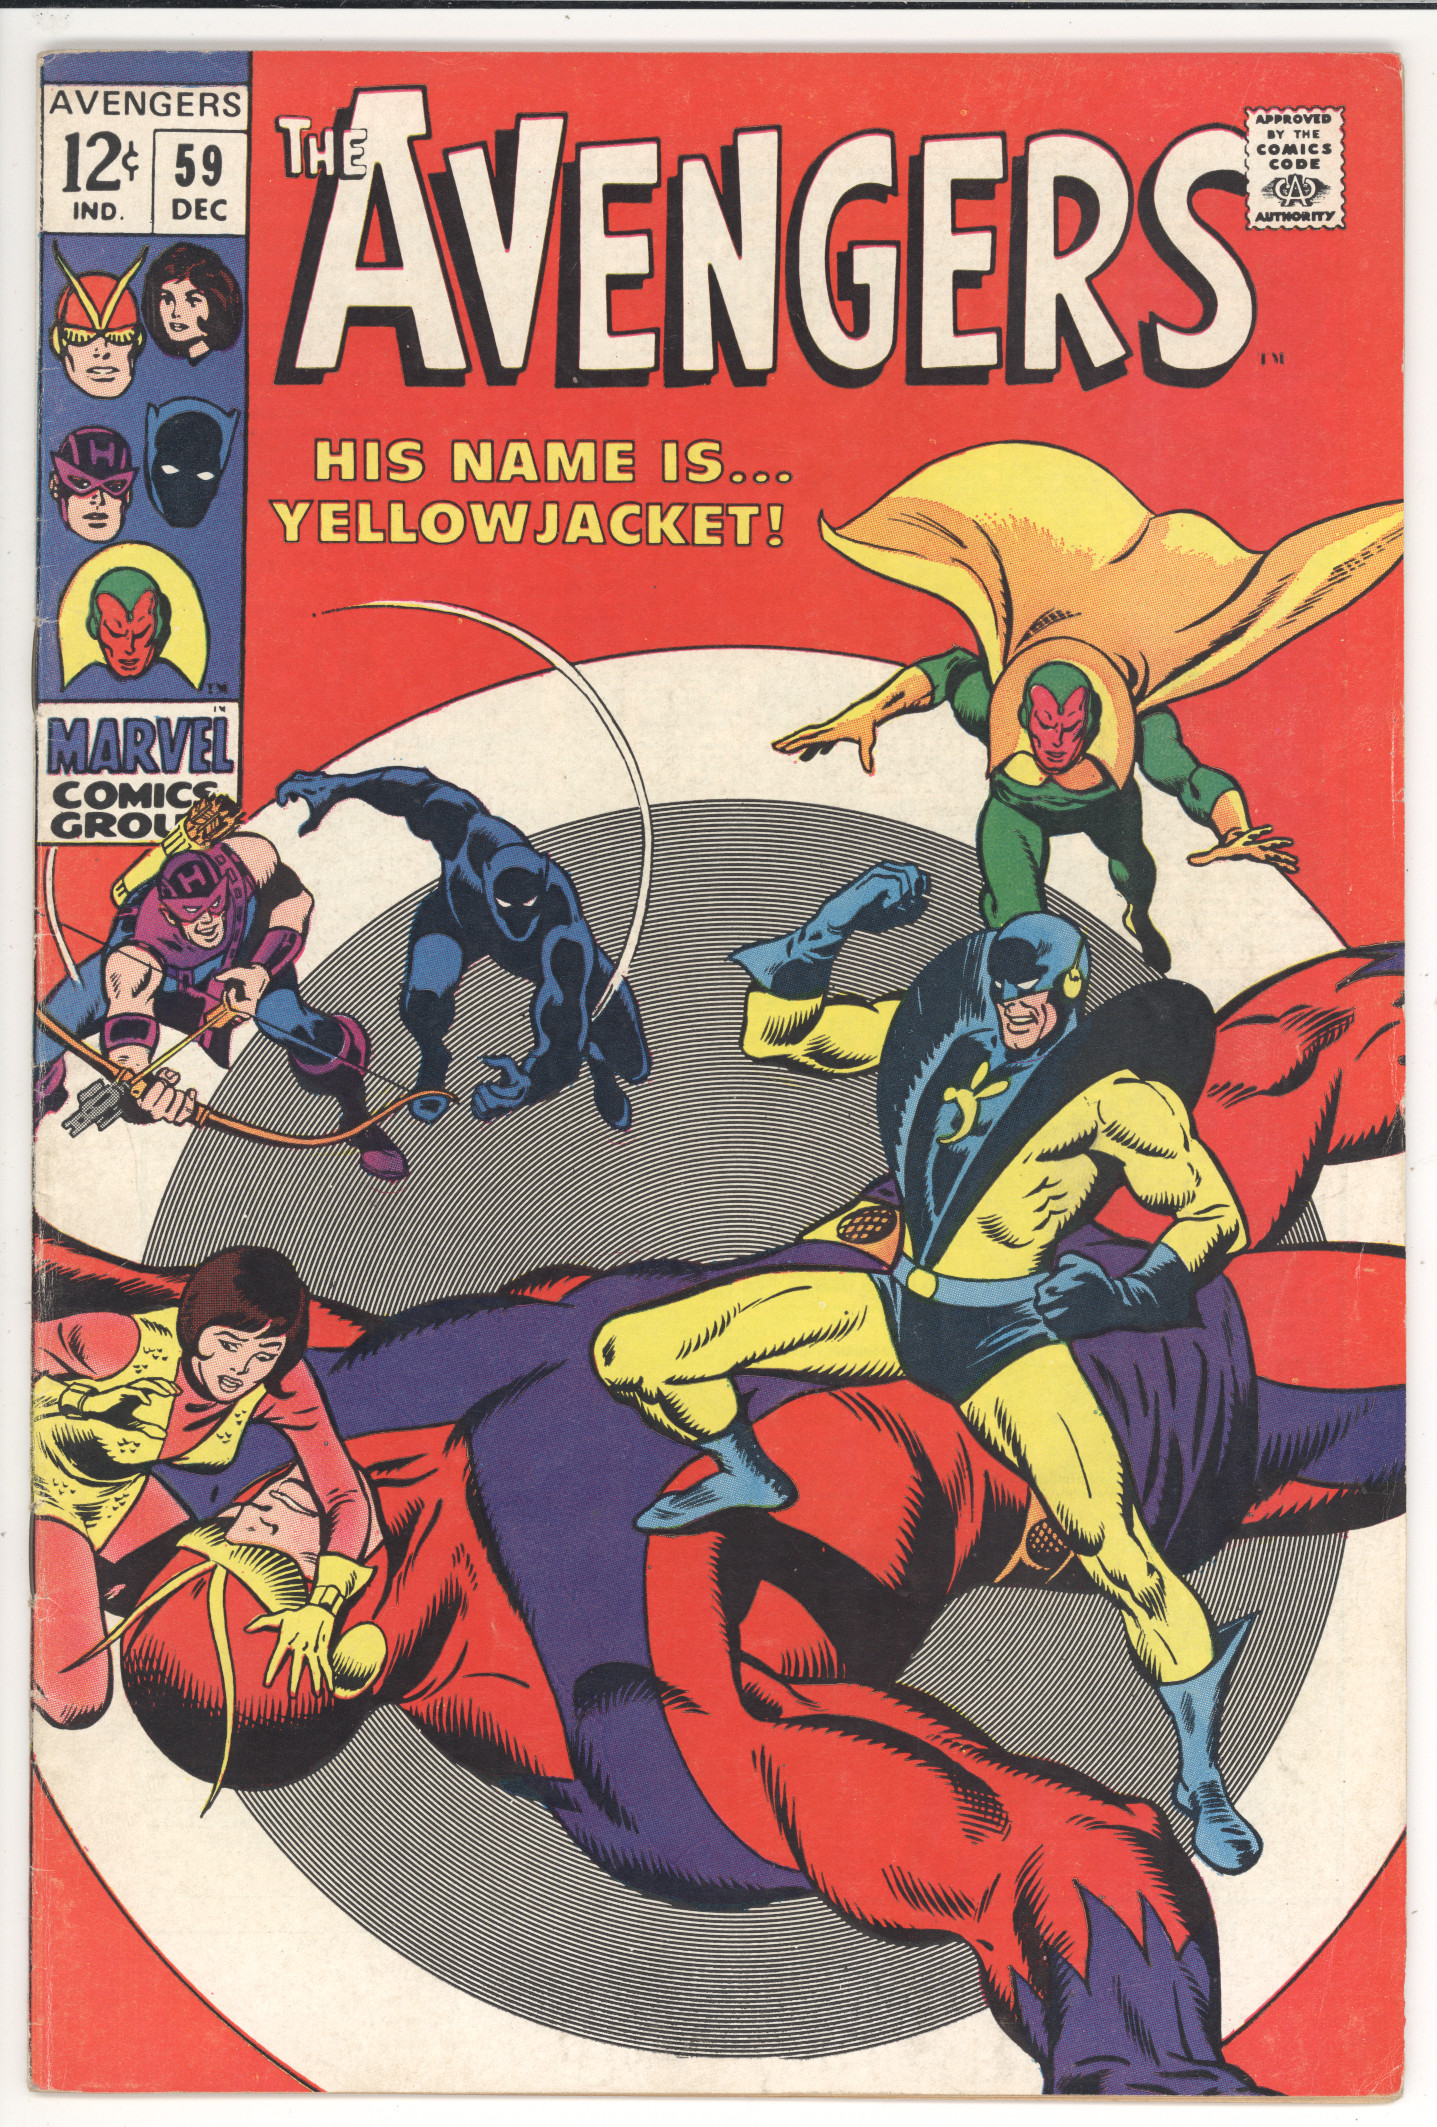 Avengers #59 front